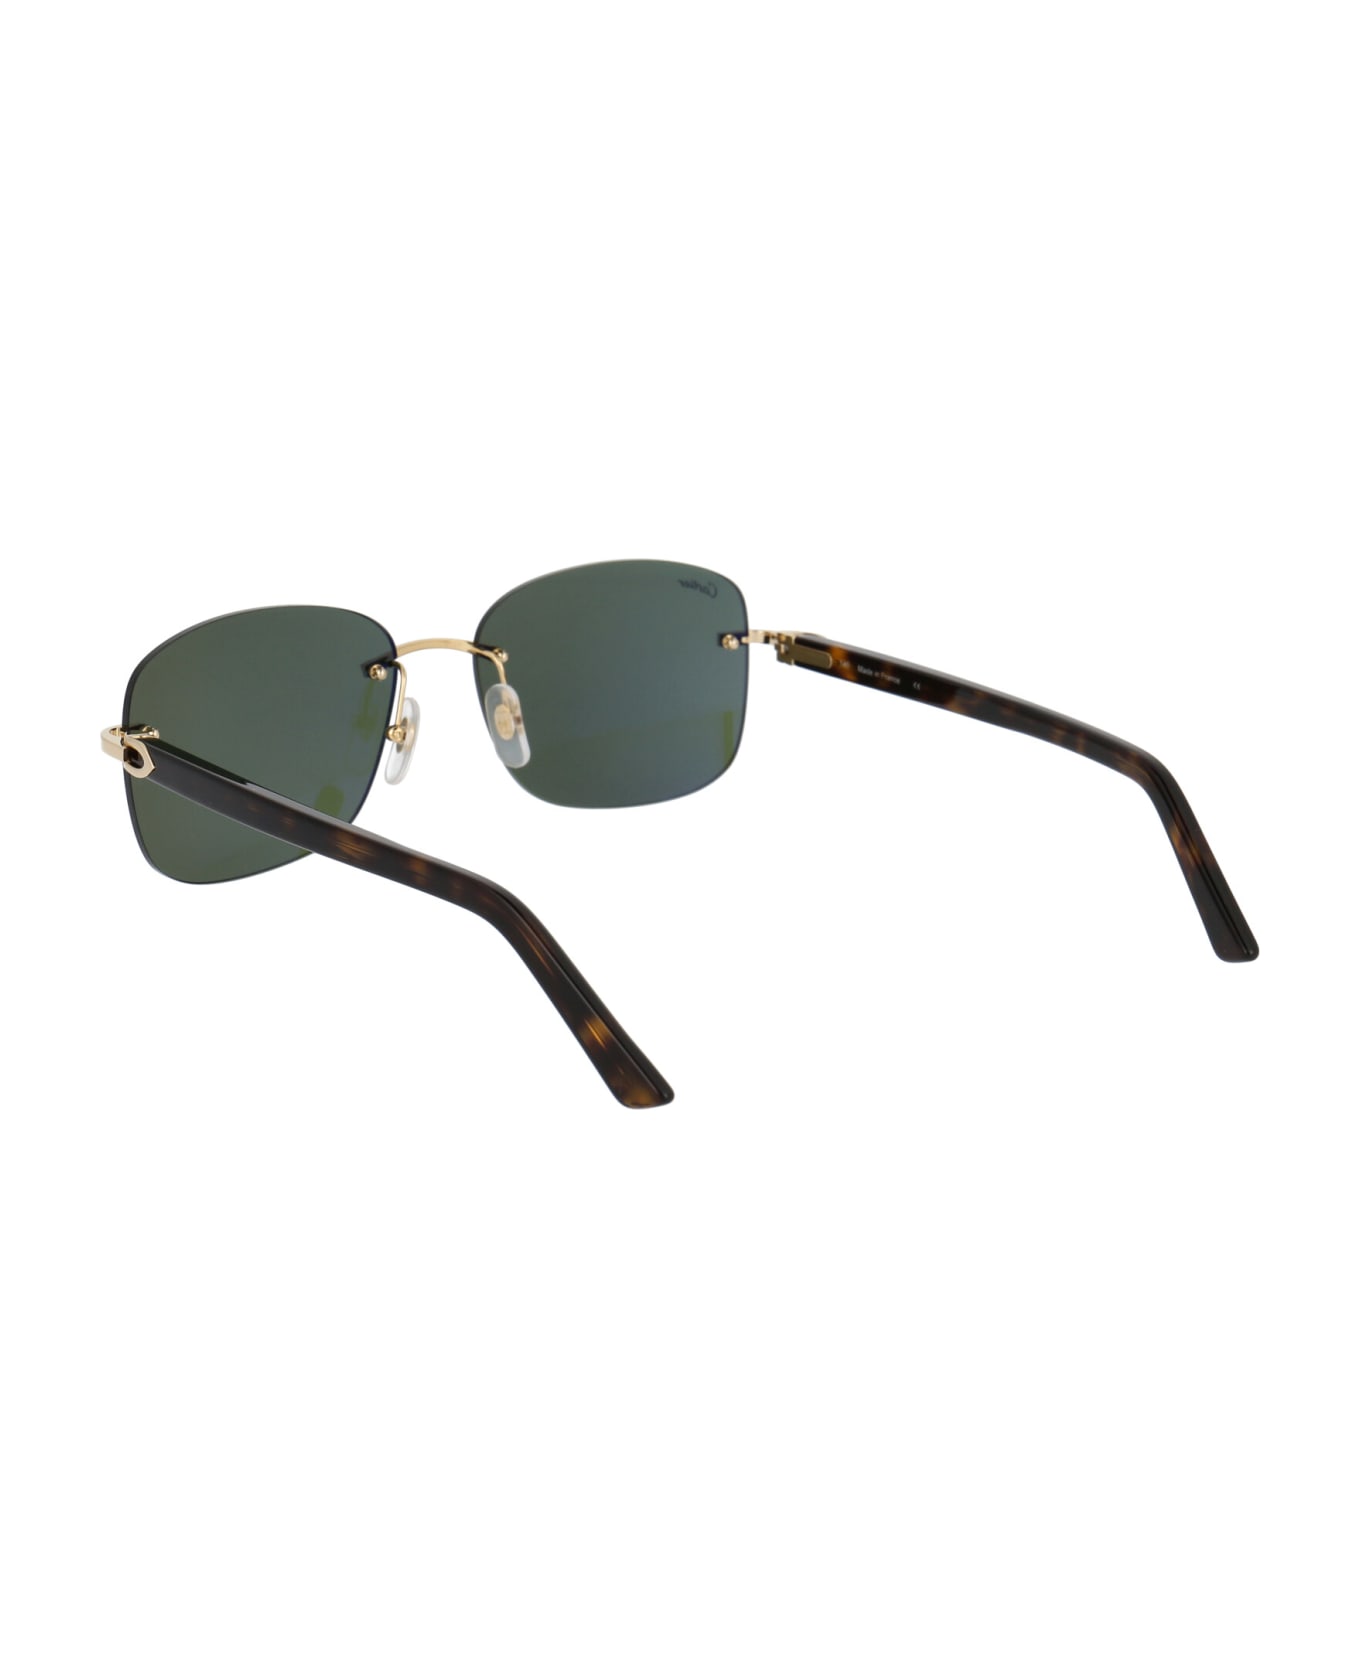 Cartier Eyewear Ct0227s Sunglasses - 002 GOLD HAVANA GREEN